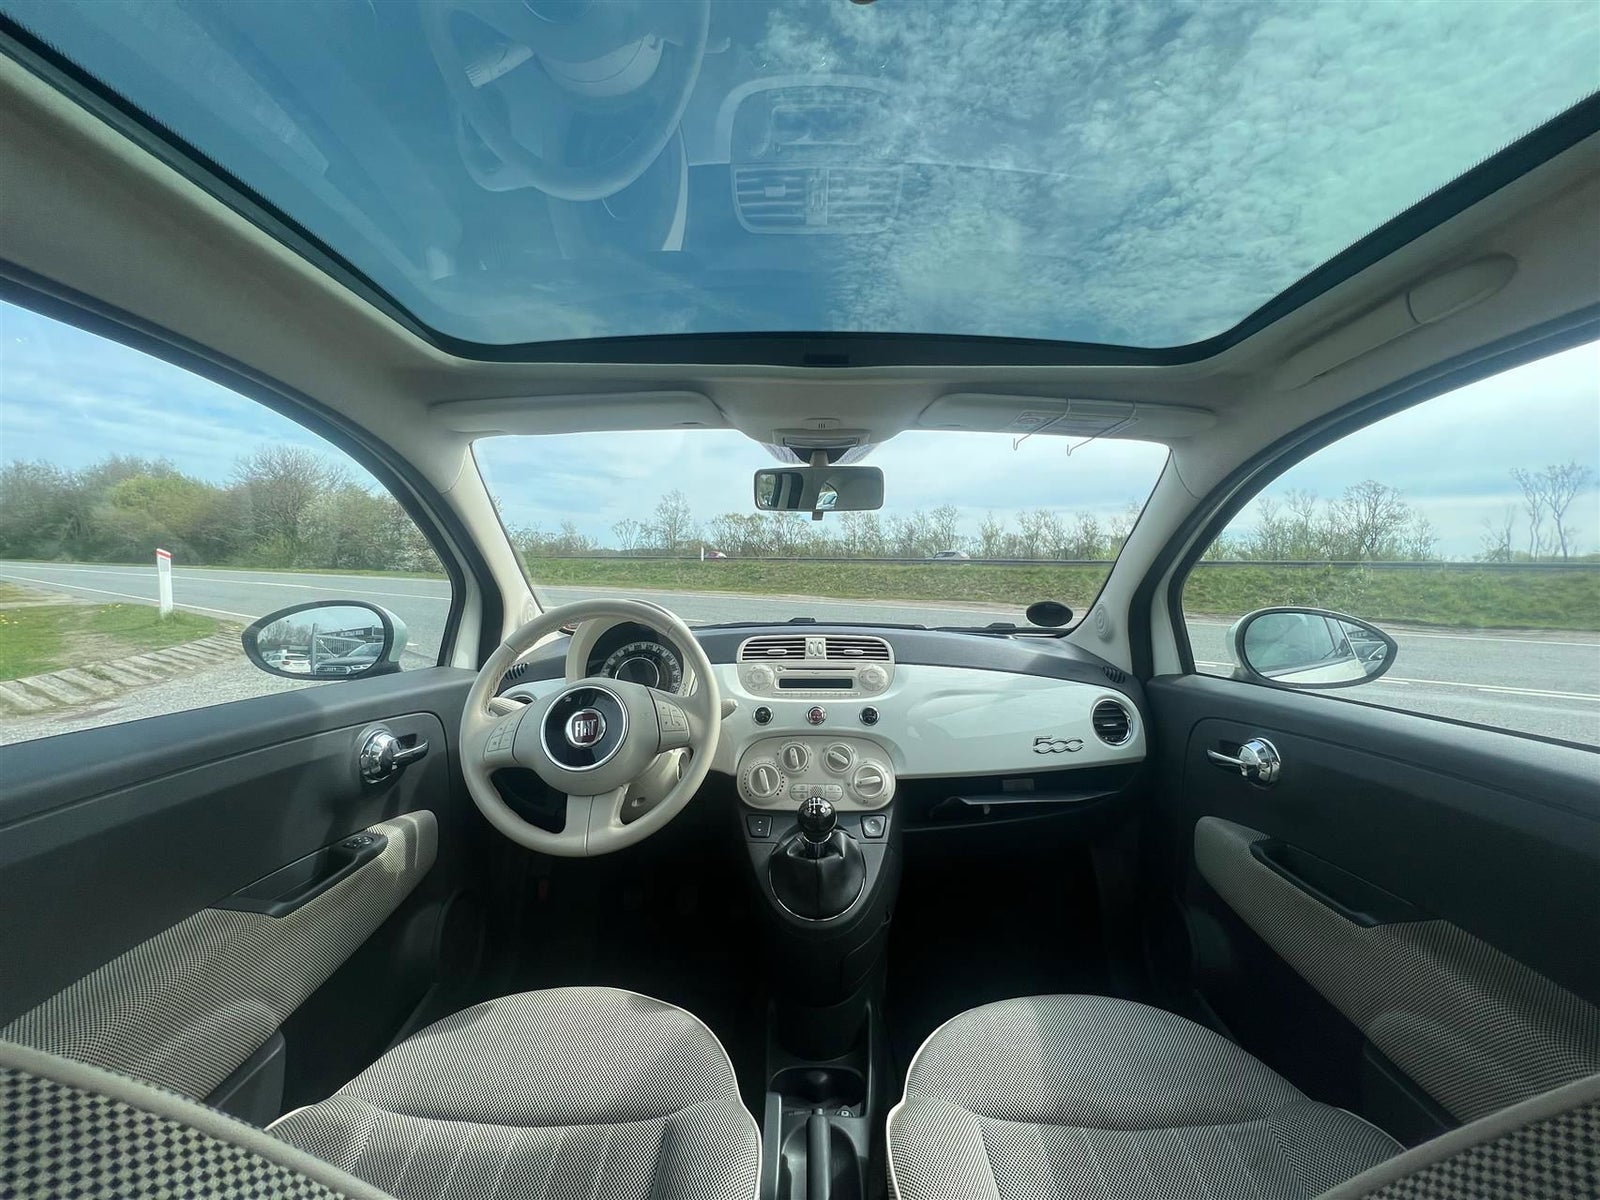 Fiat 500 1,2 Lounge Benzin modelår 2011 km 94000 Hvid ABS